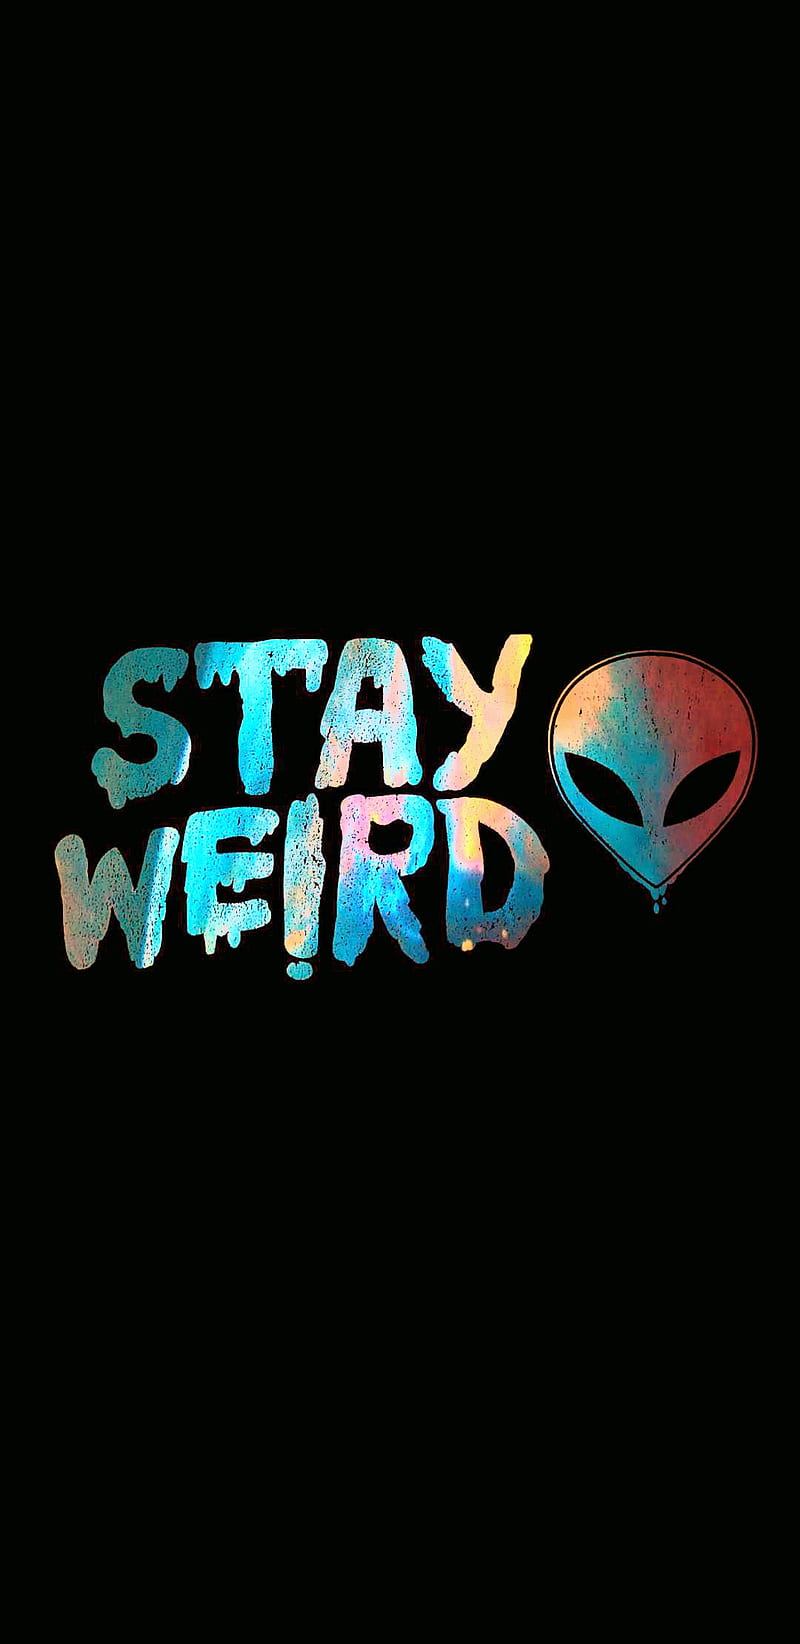 Stay weird by joshua mccoy - Alien